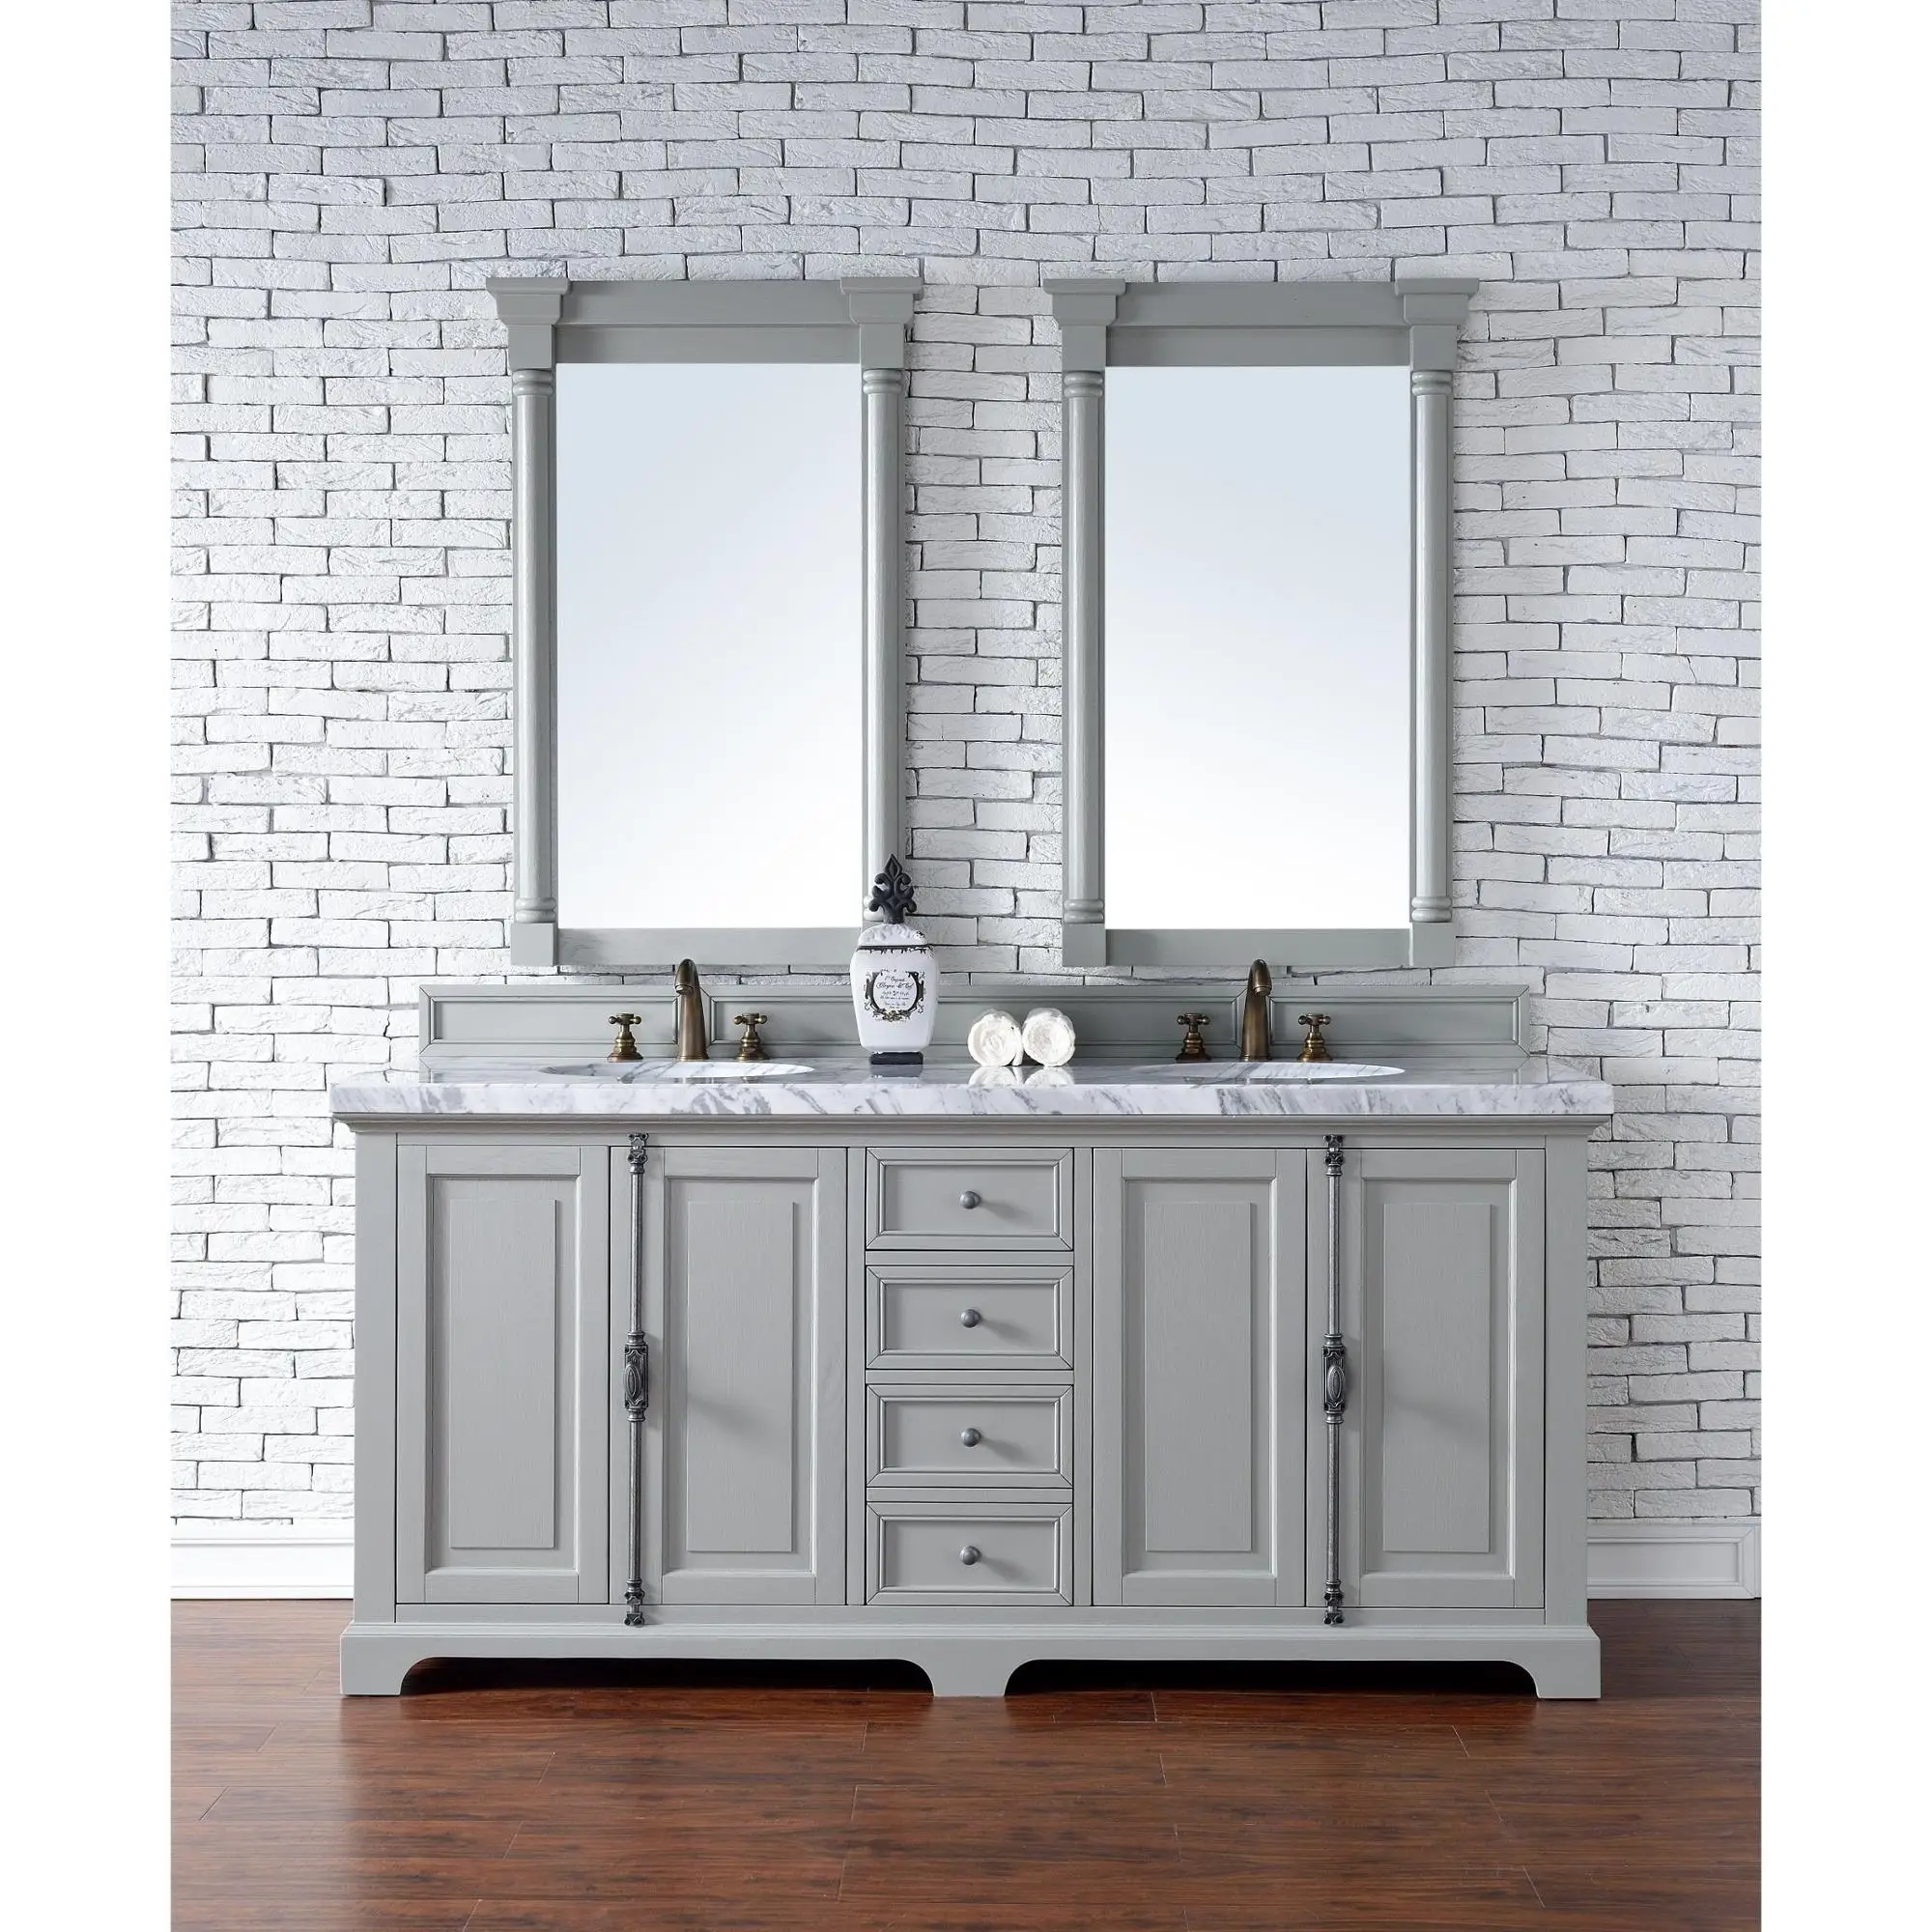 2021 Hangzhou Vermont Factory Ghana Bathroom Vanity Mirror Hinges Bathroom Cabinets Buy Bathroom Cabinet